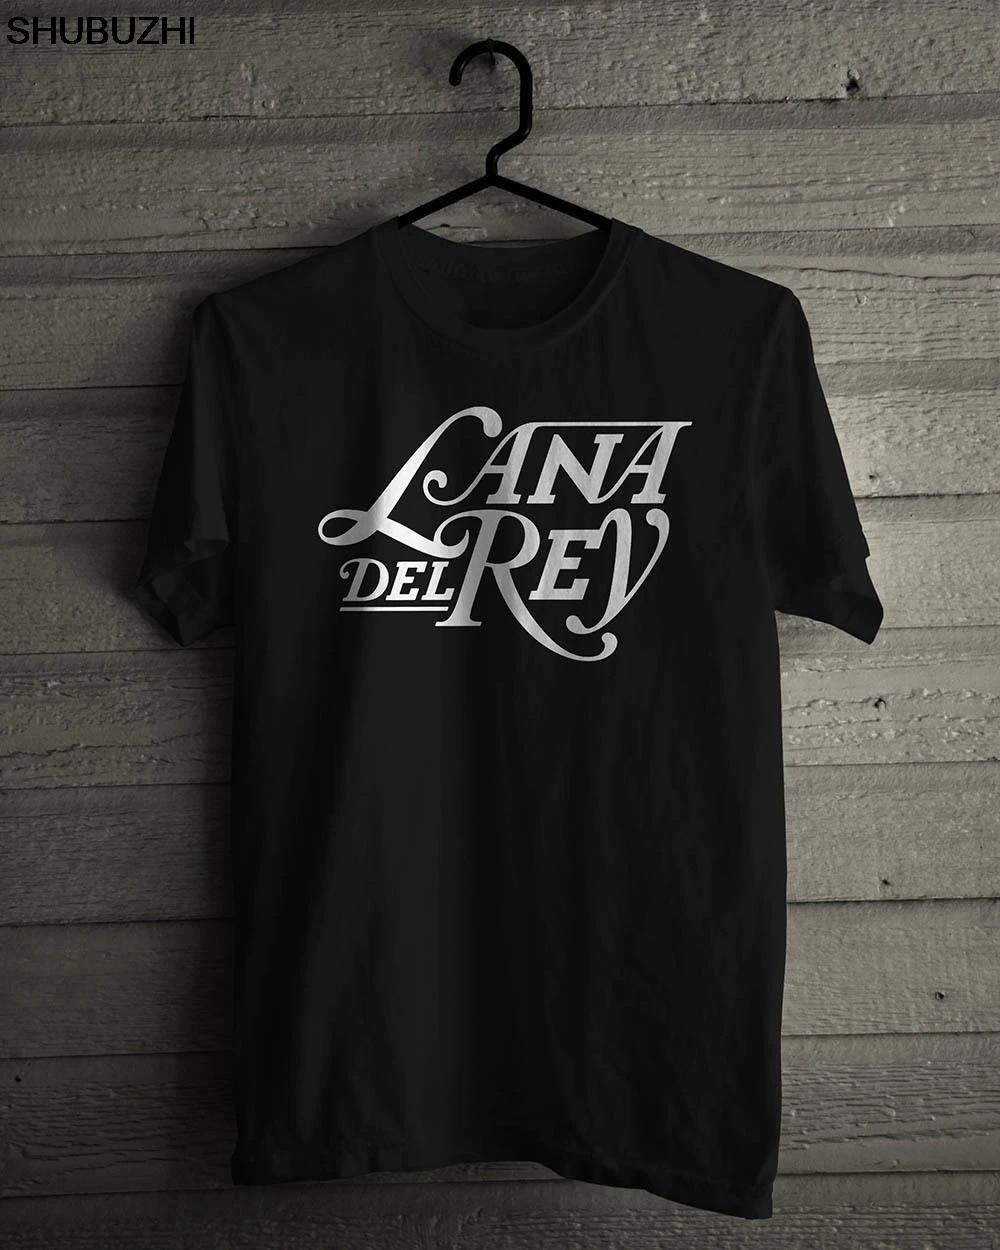 

New Lana Del Rey Born To Die Music Black shirt men cotton t-shirts summer brand tshirt euro size 4XL 5XL